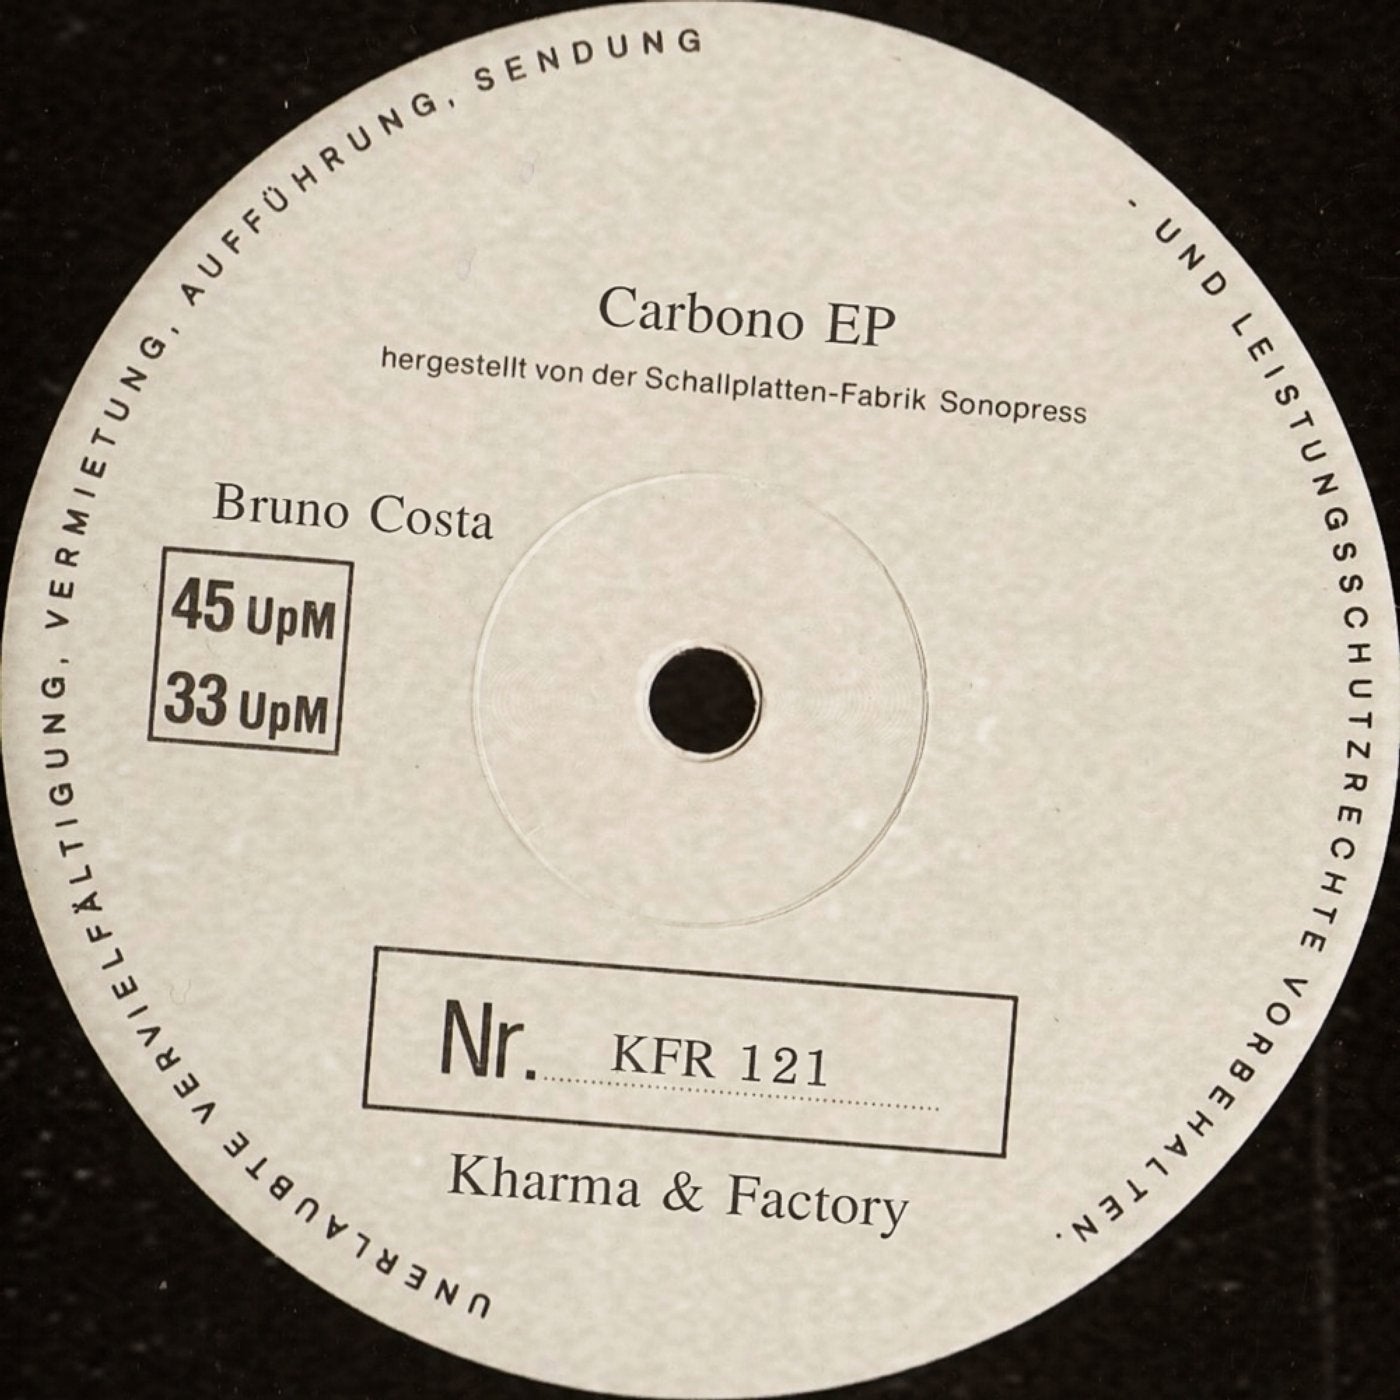 Carbono EP